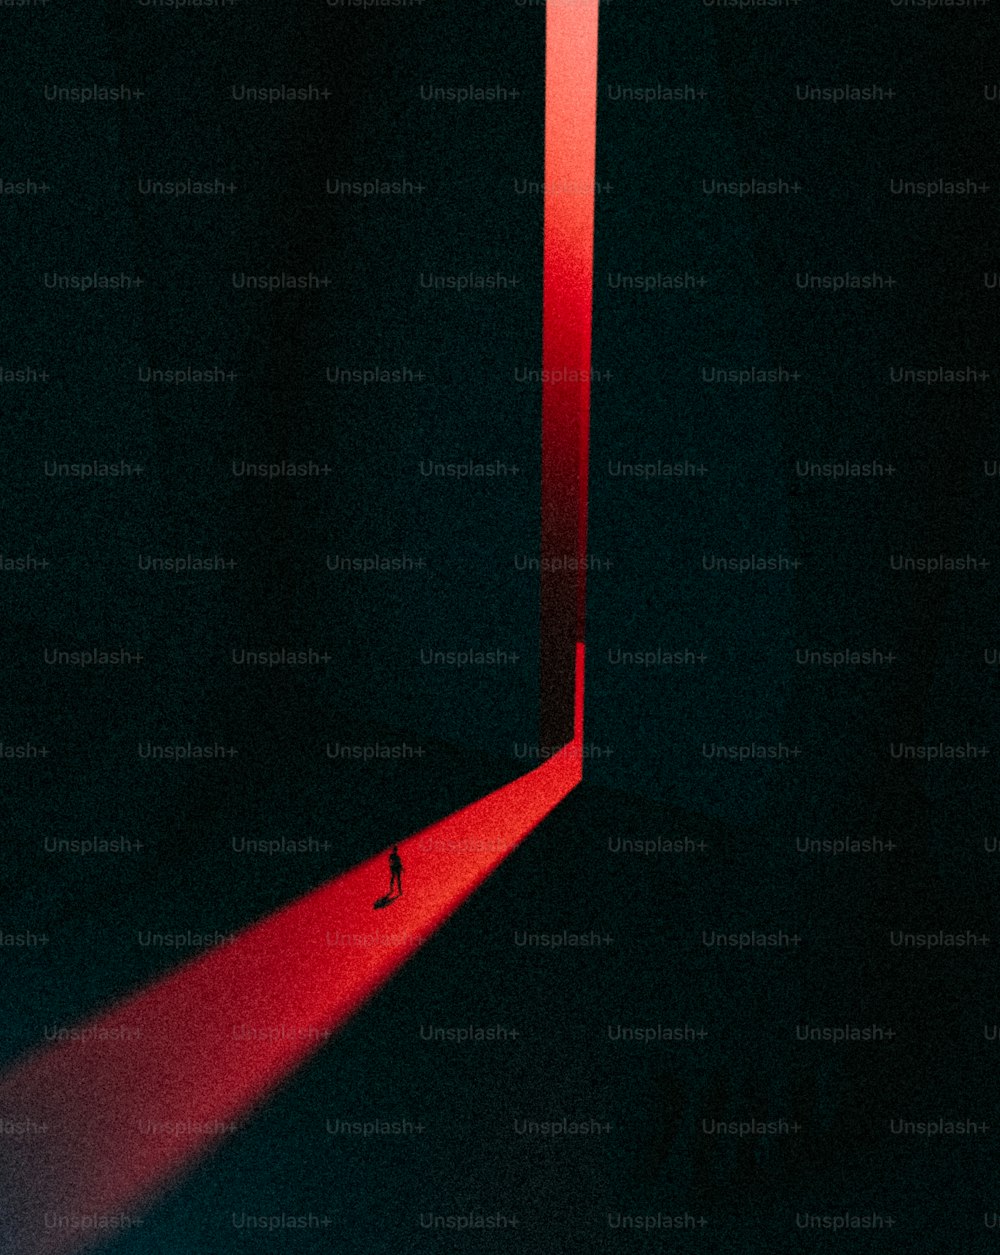 a red light shining through a mirror in a dark room